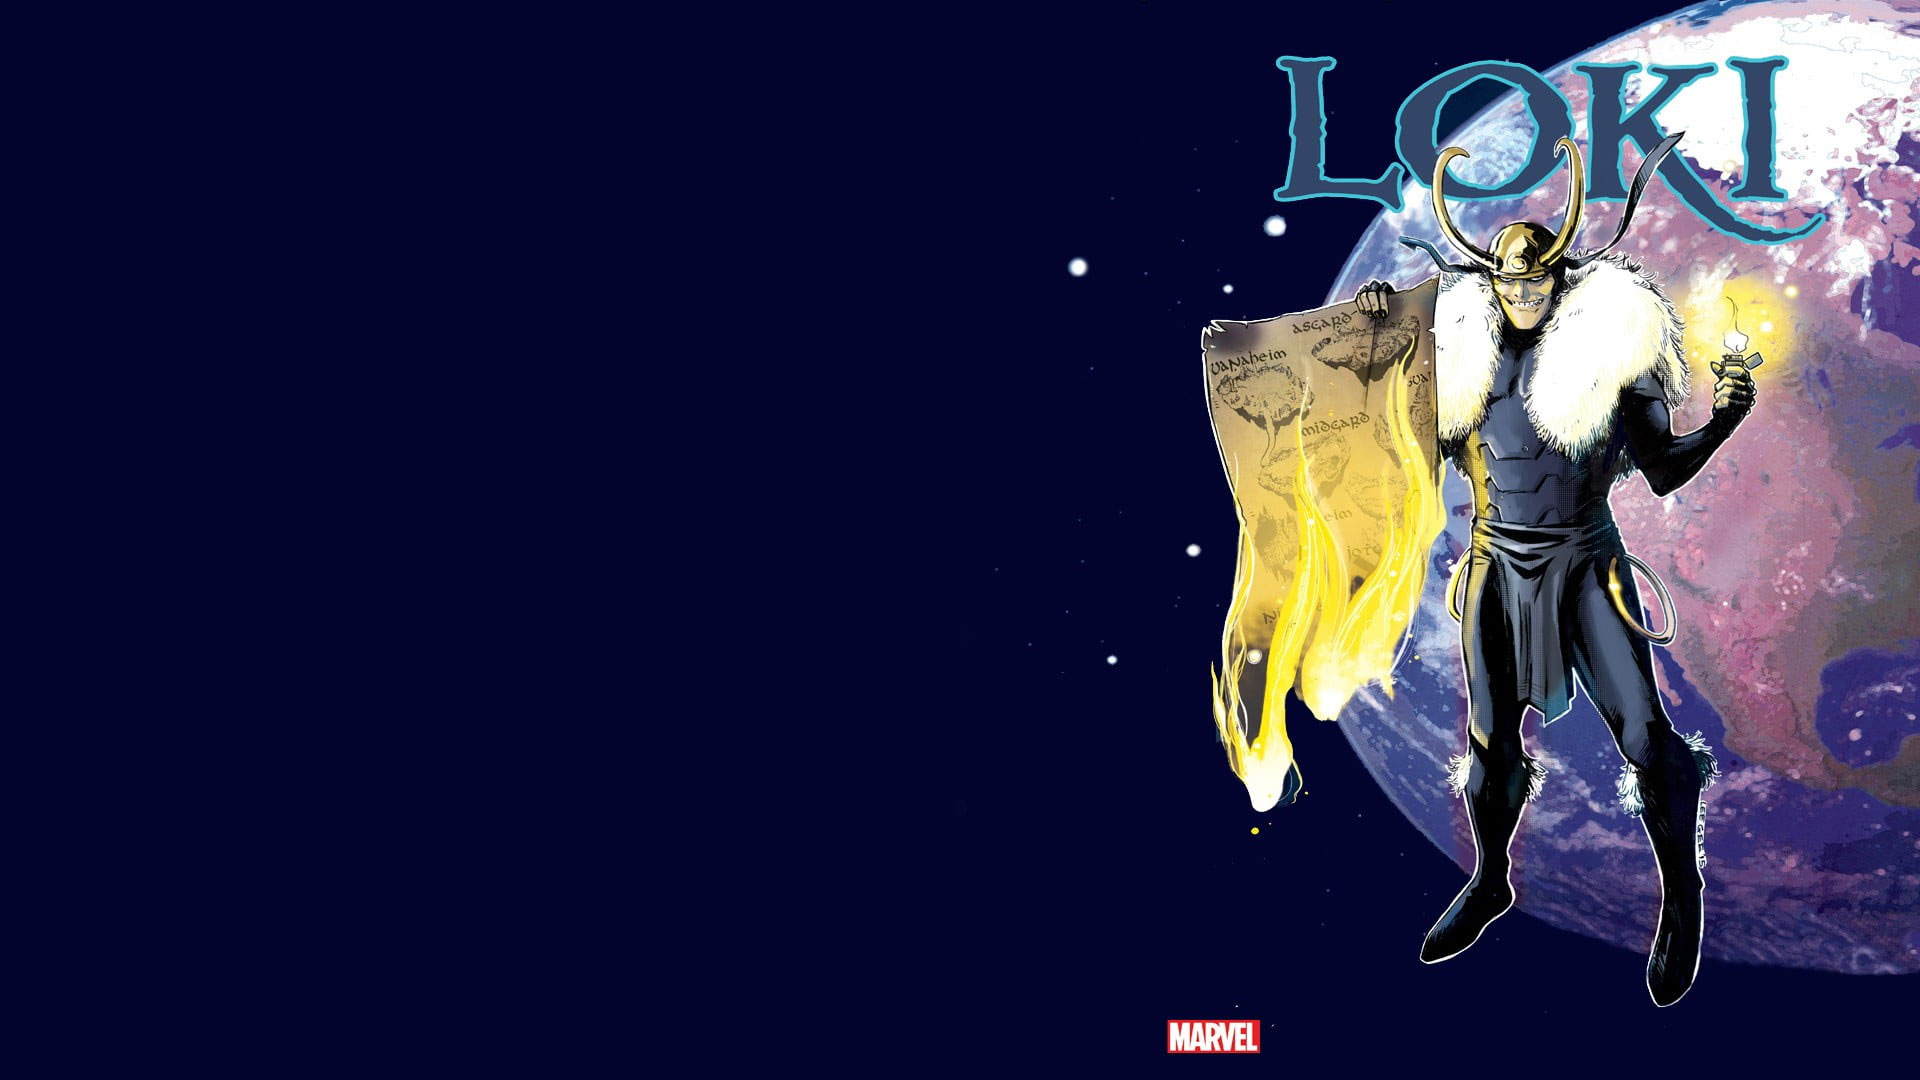 Wallpaper Loki Illustration, Marvel Comics - Wallpaperforu